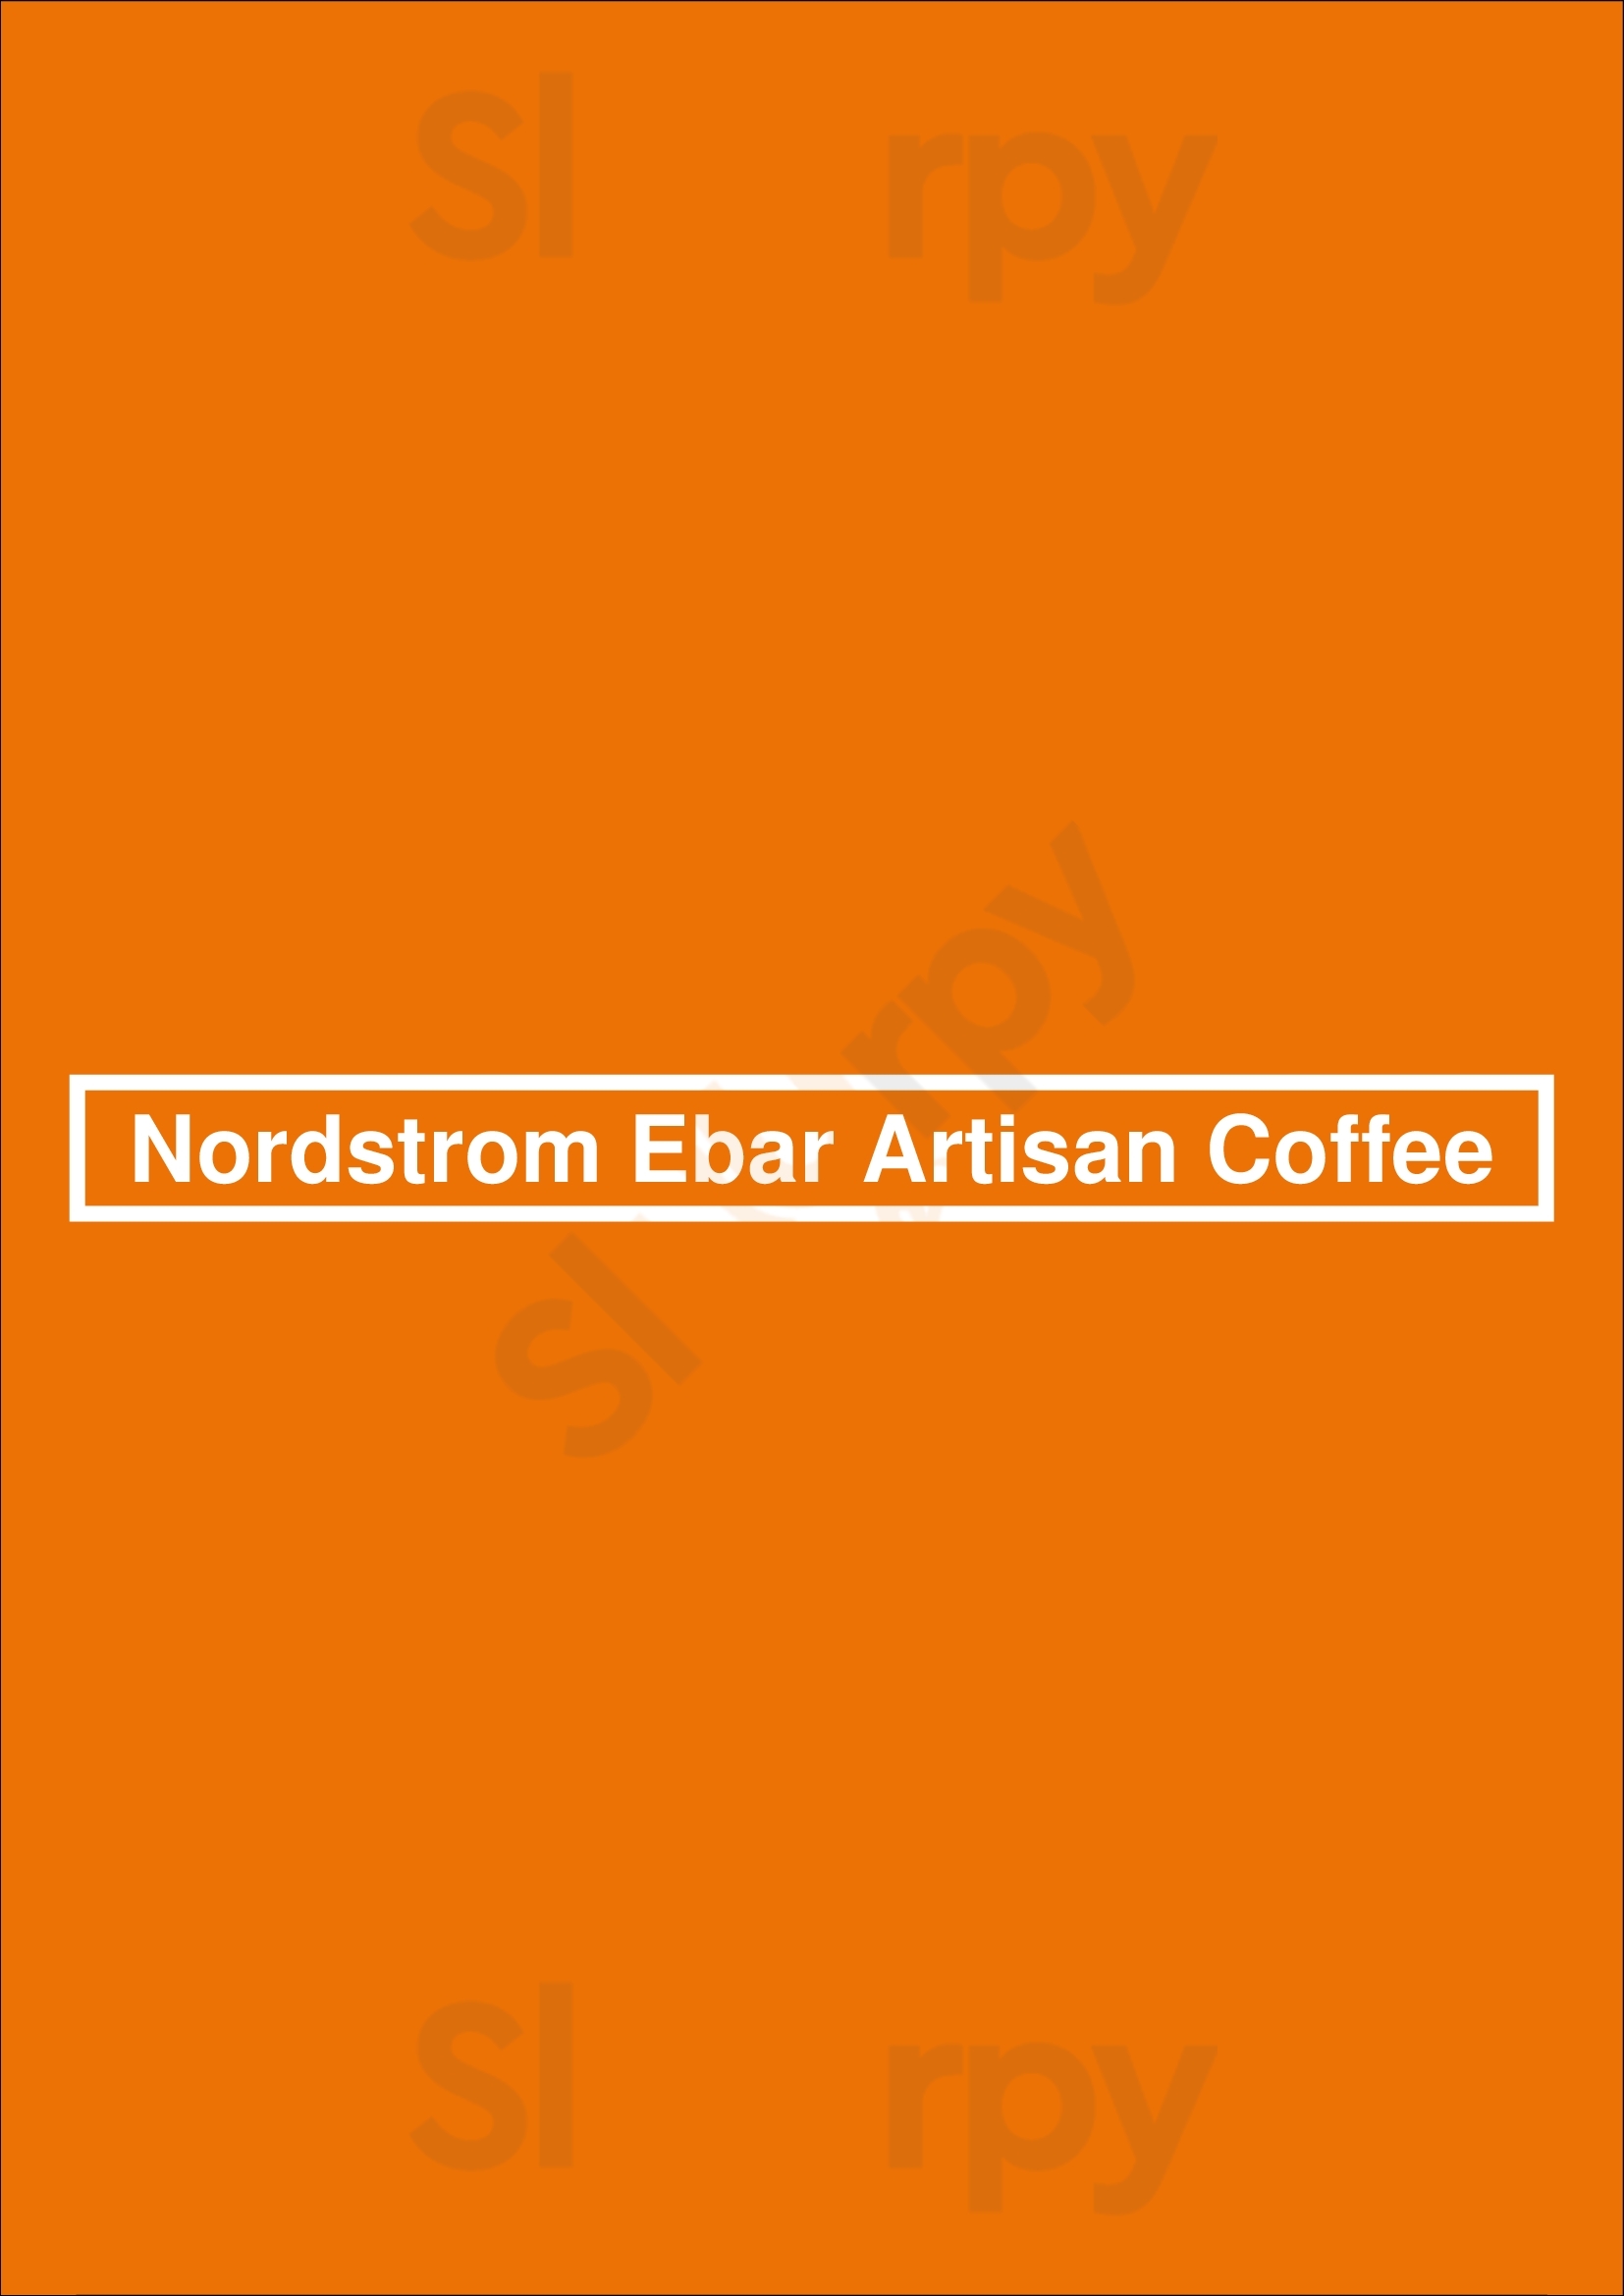 Nordstrom Ebar Artisan Coffee Vancouver Menu - 1